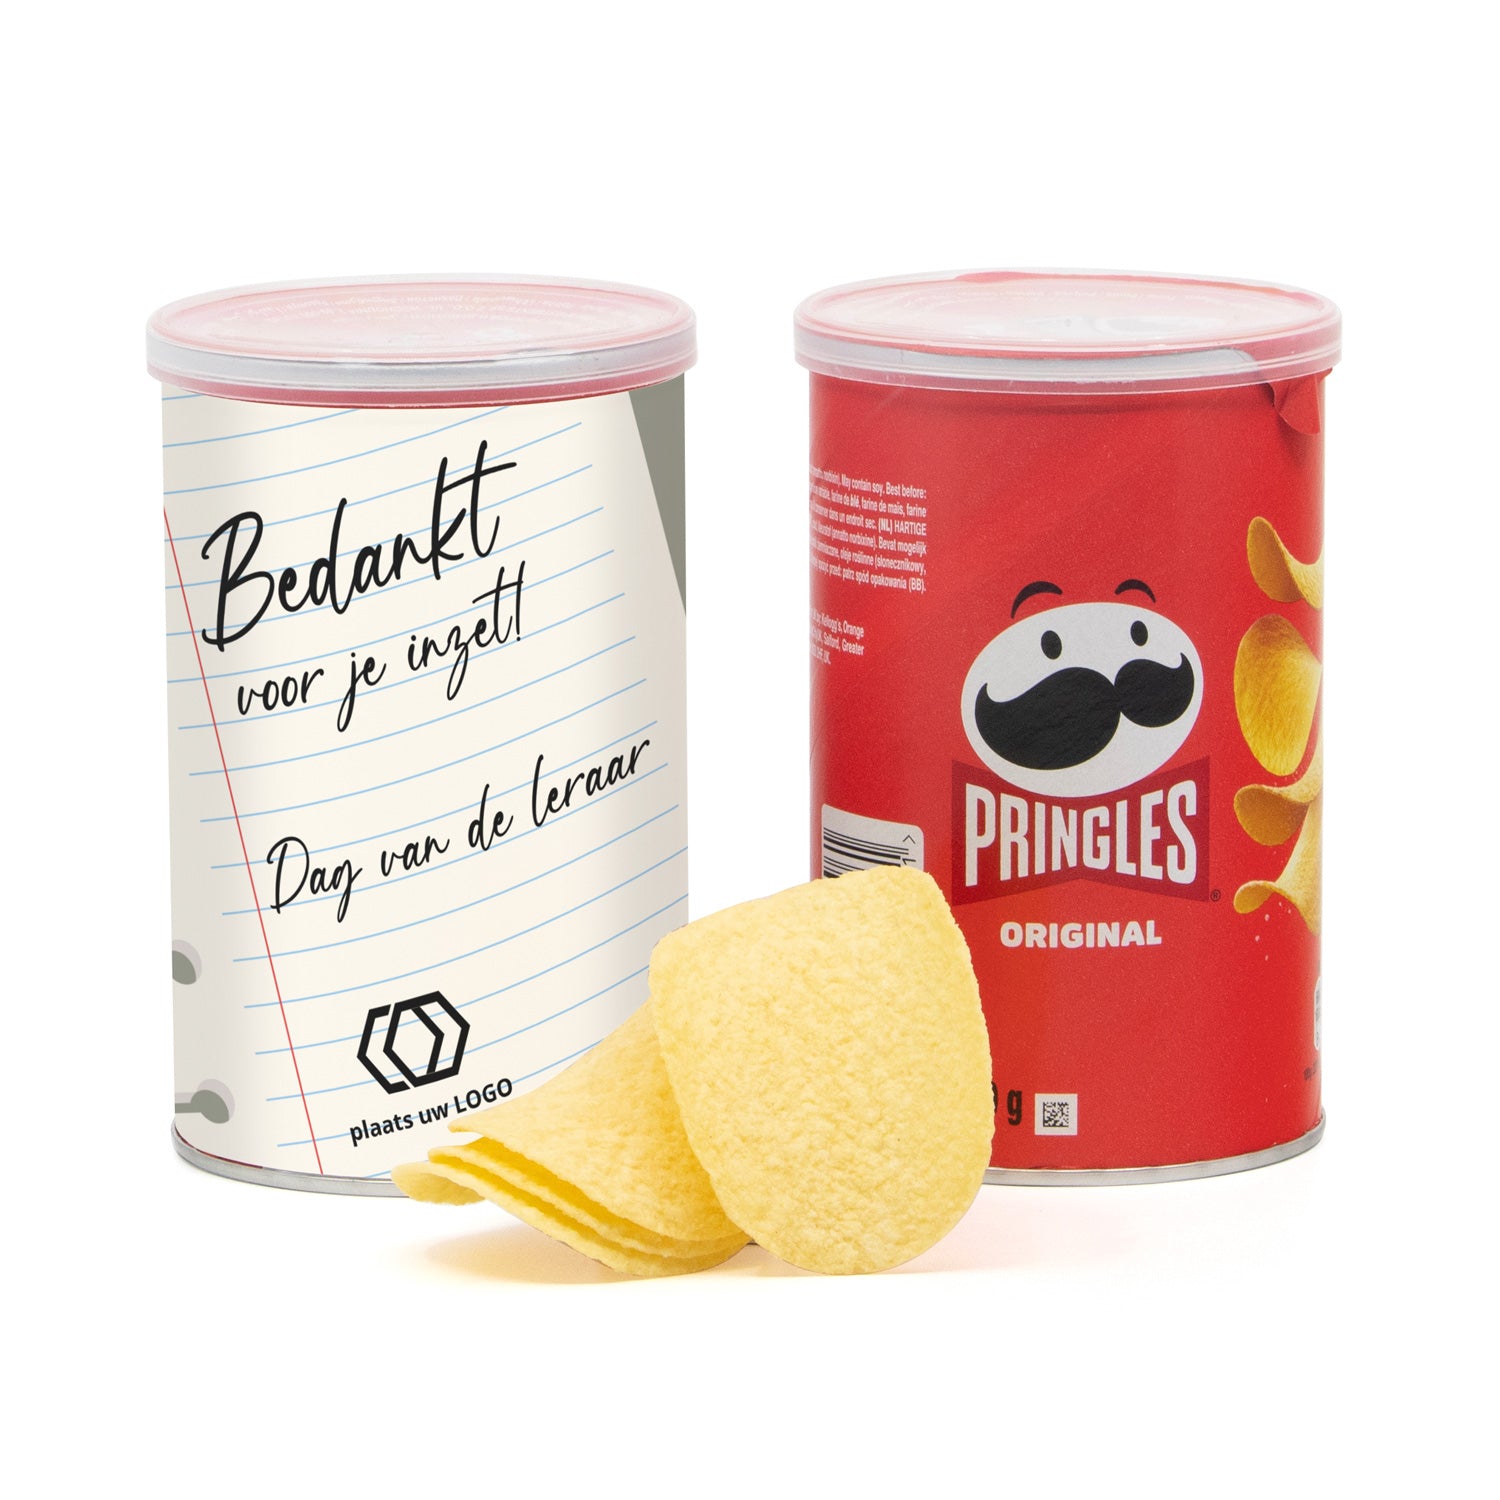 Pringles chipsblikje 70 gram met eigen wikkel - Leraar - Bedankjes.nl